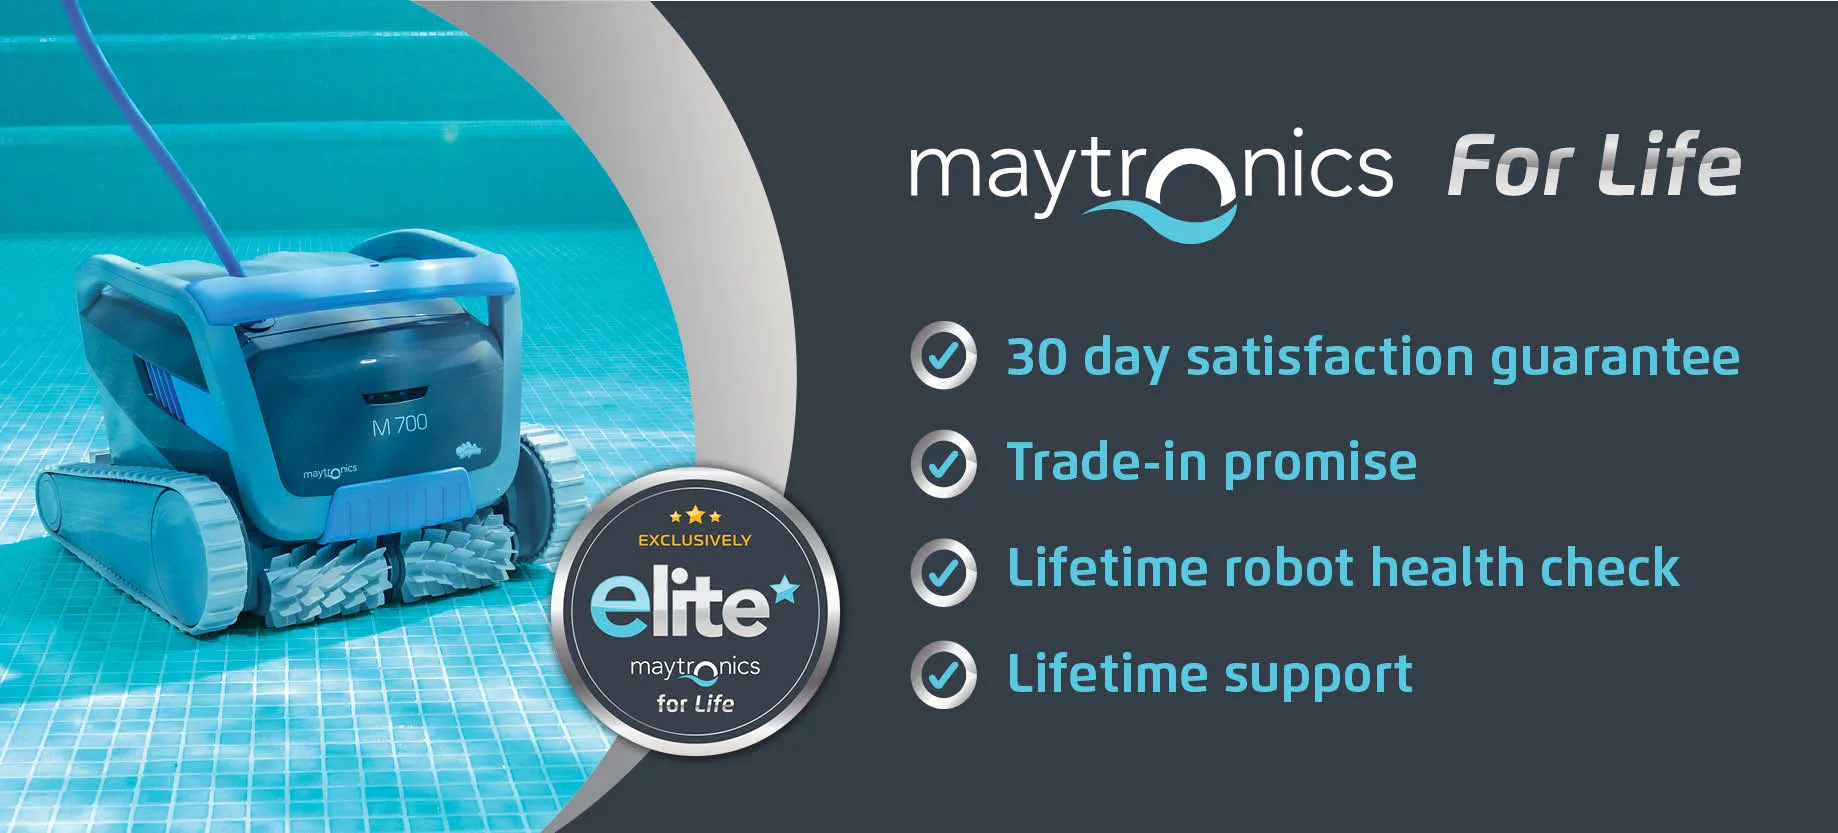 Maytronics For Life program